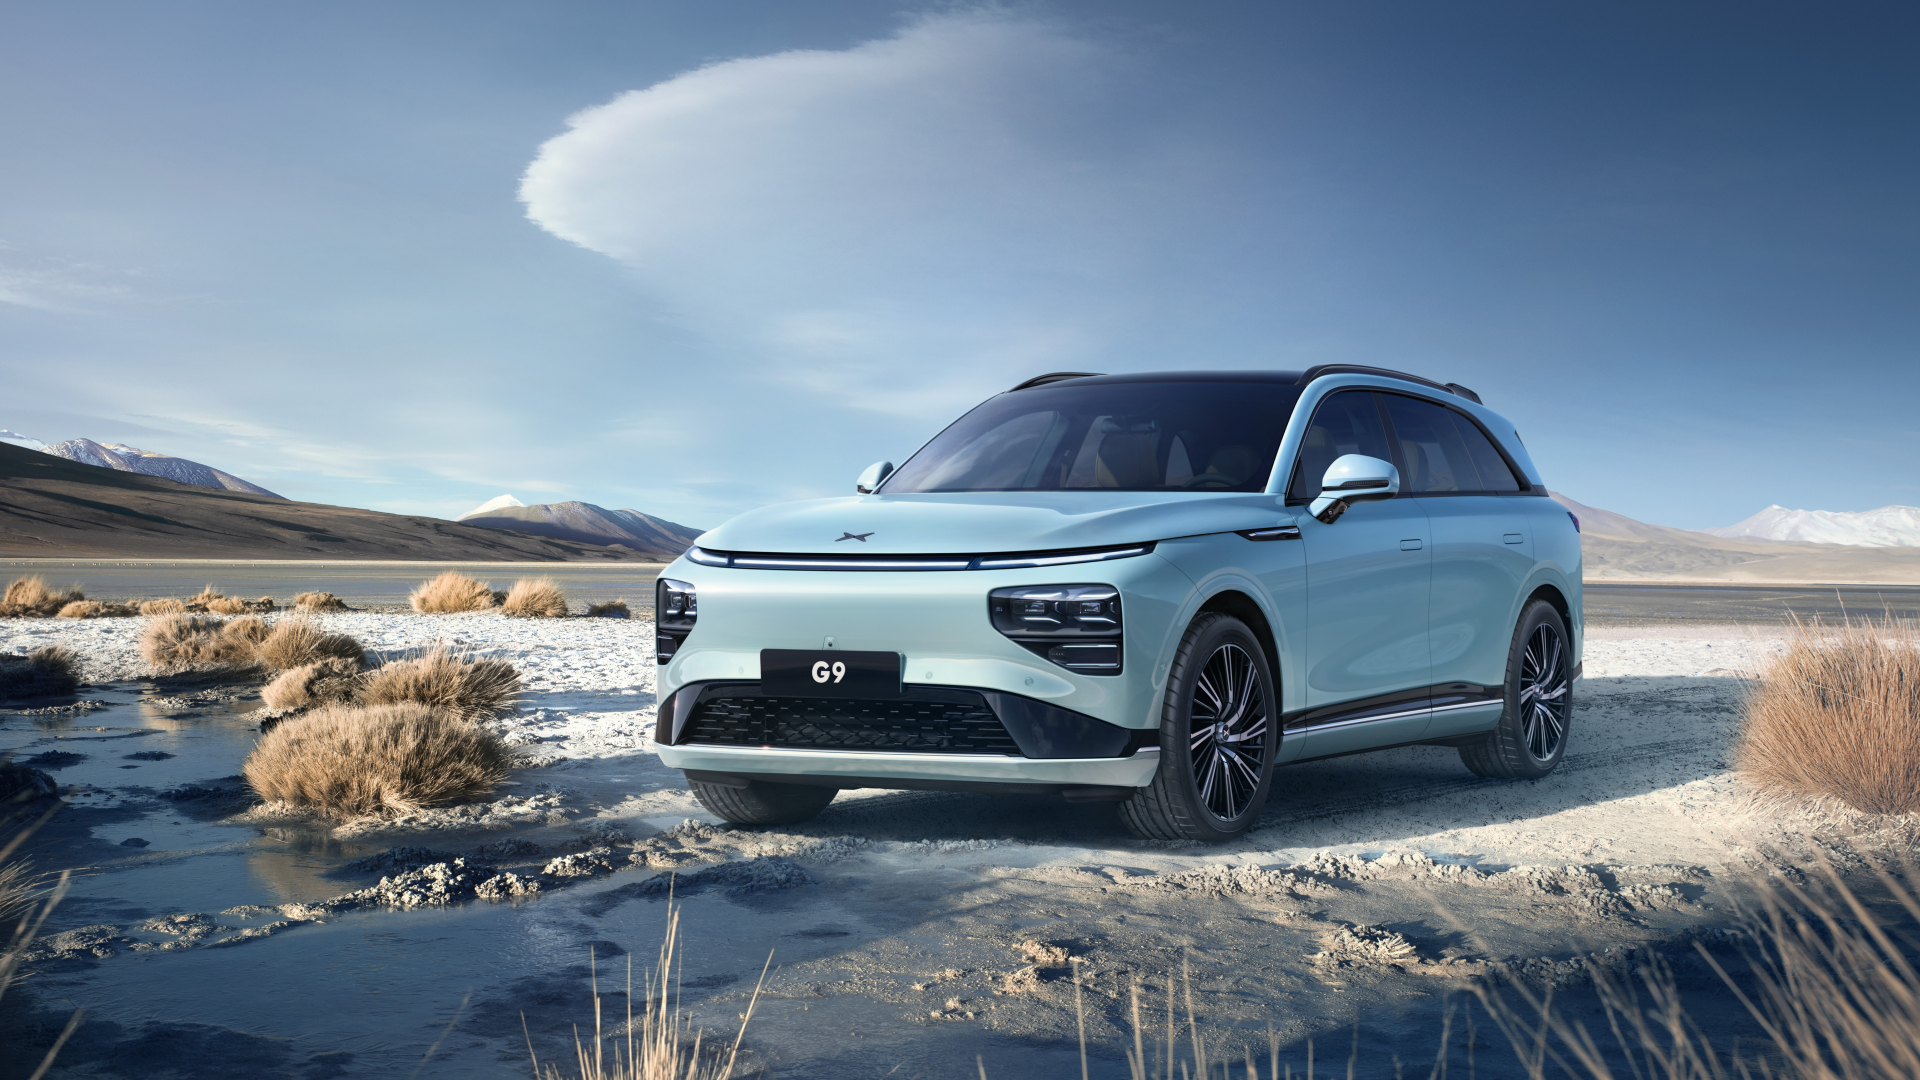 XPeng เปิดตัวรถยนต์ SUV ไฟฟ้ารุ่น G9 ที่ชาร์จพลังงานได้เร็วที่สุด